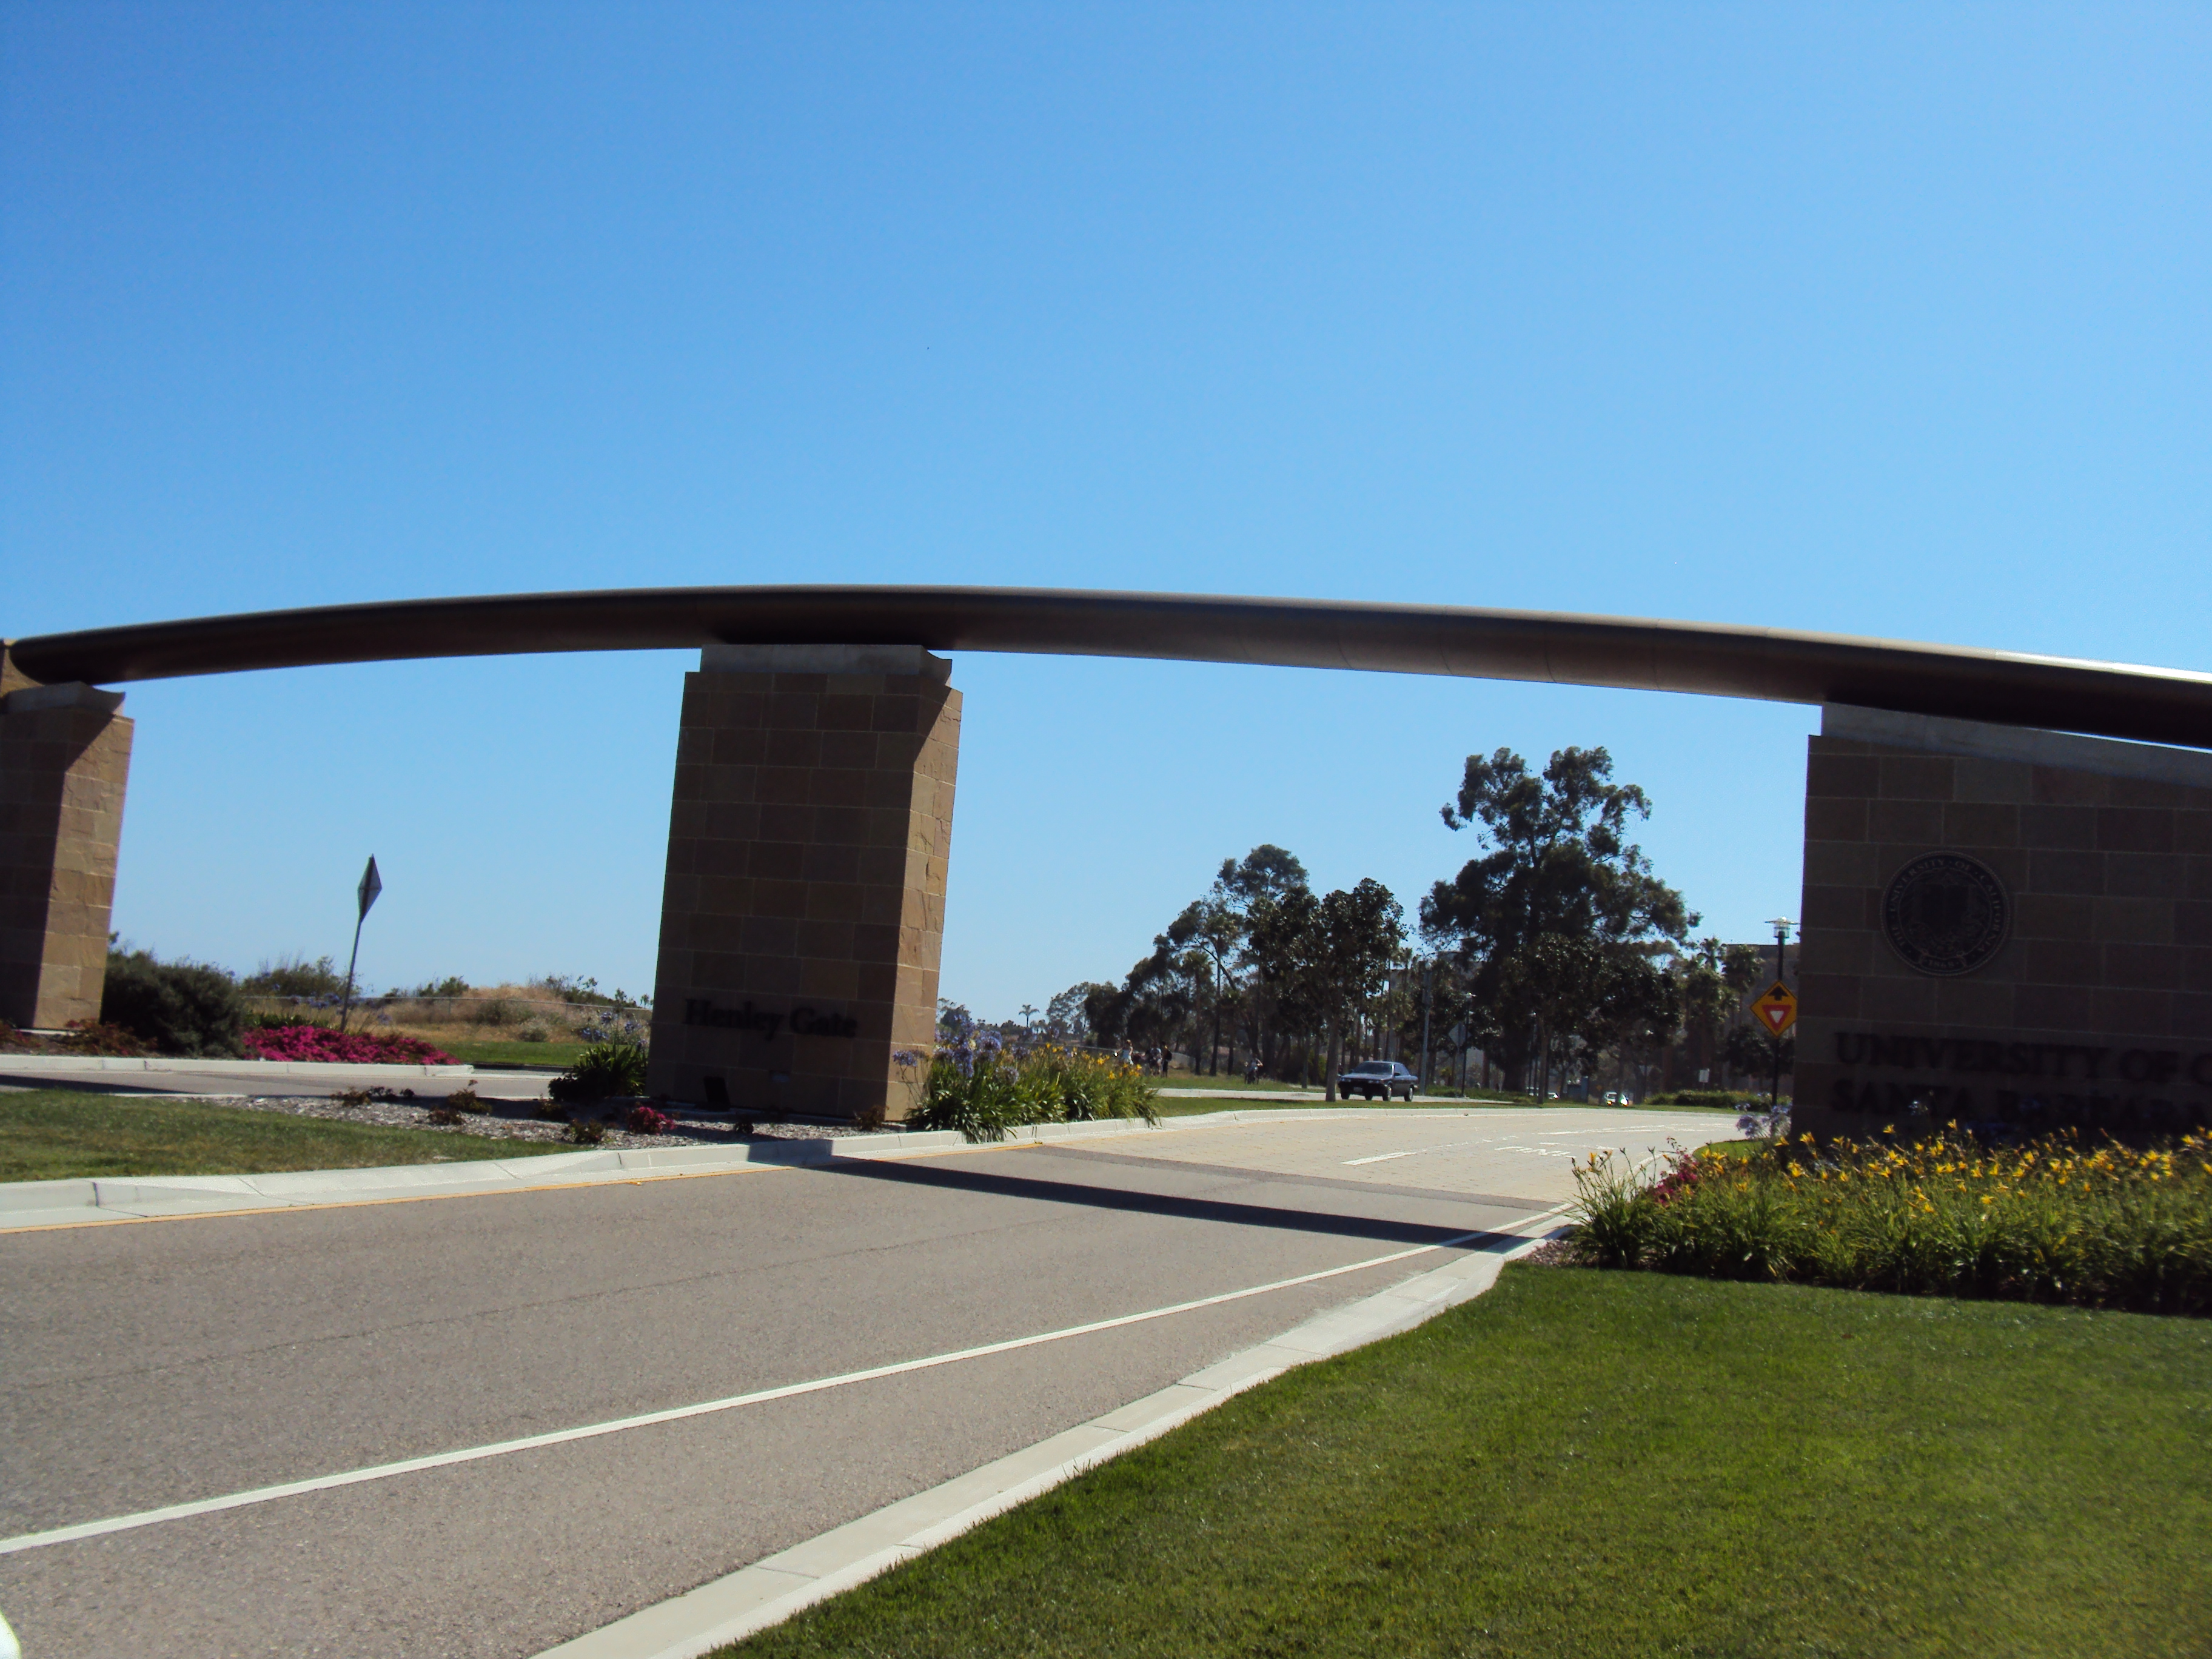 The University of California - Santa Barbara